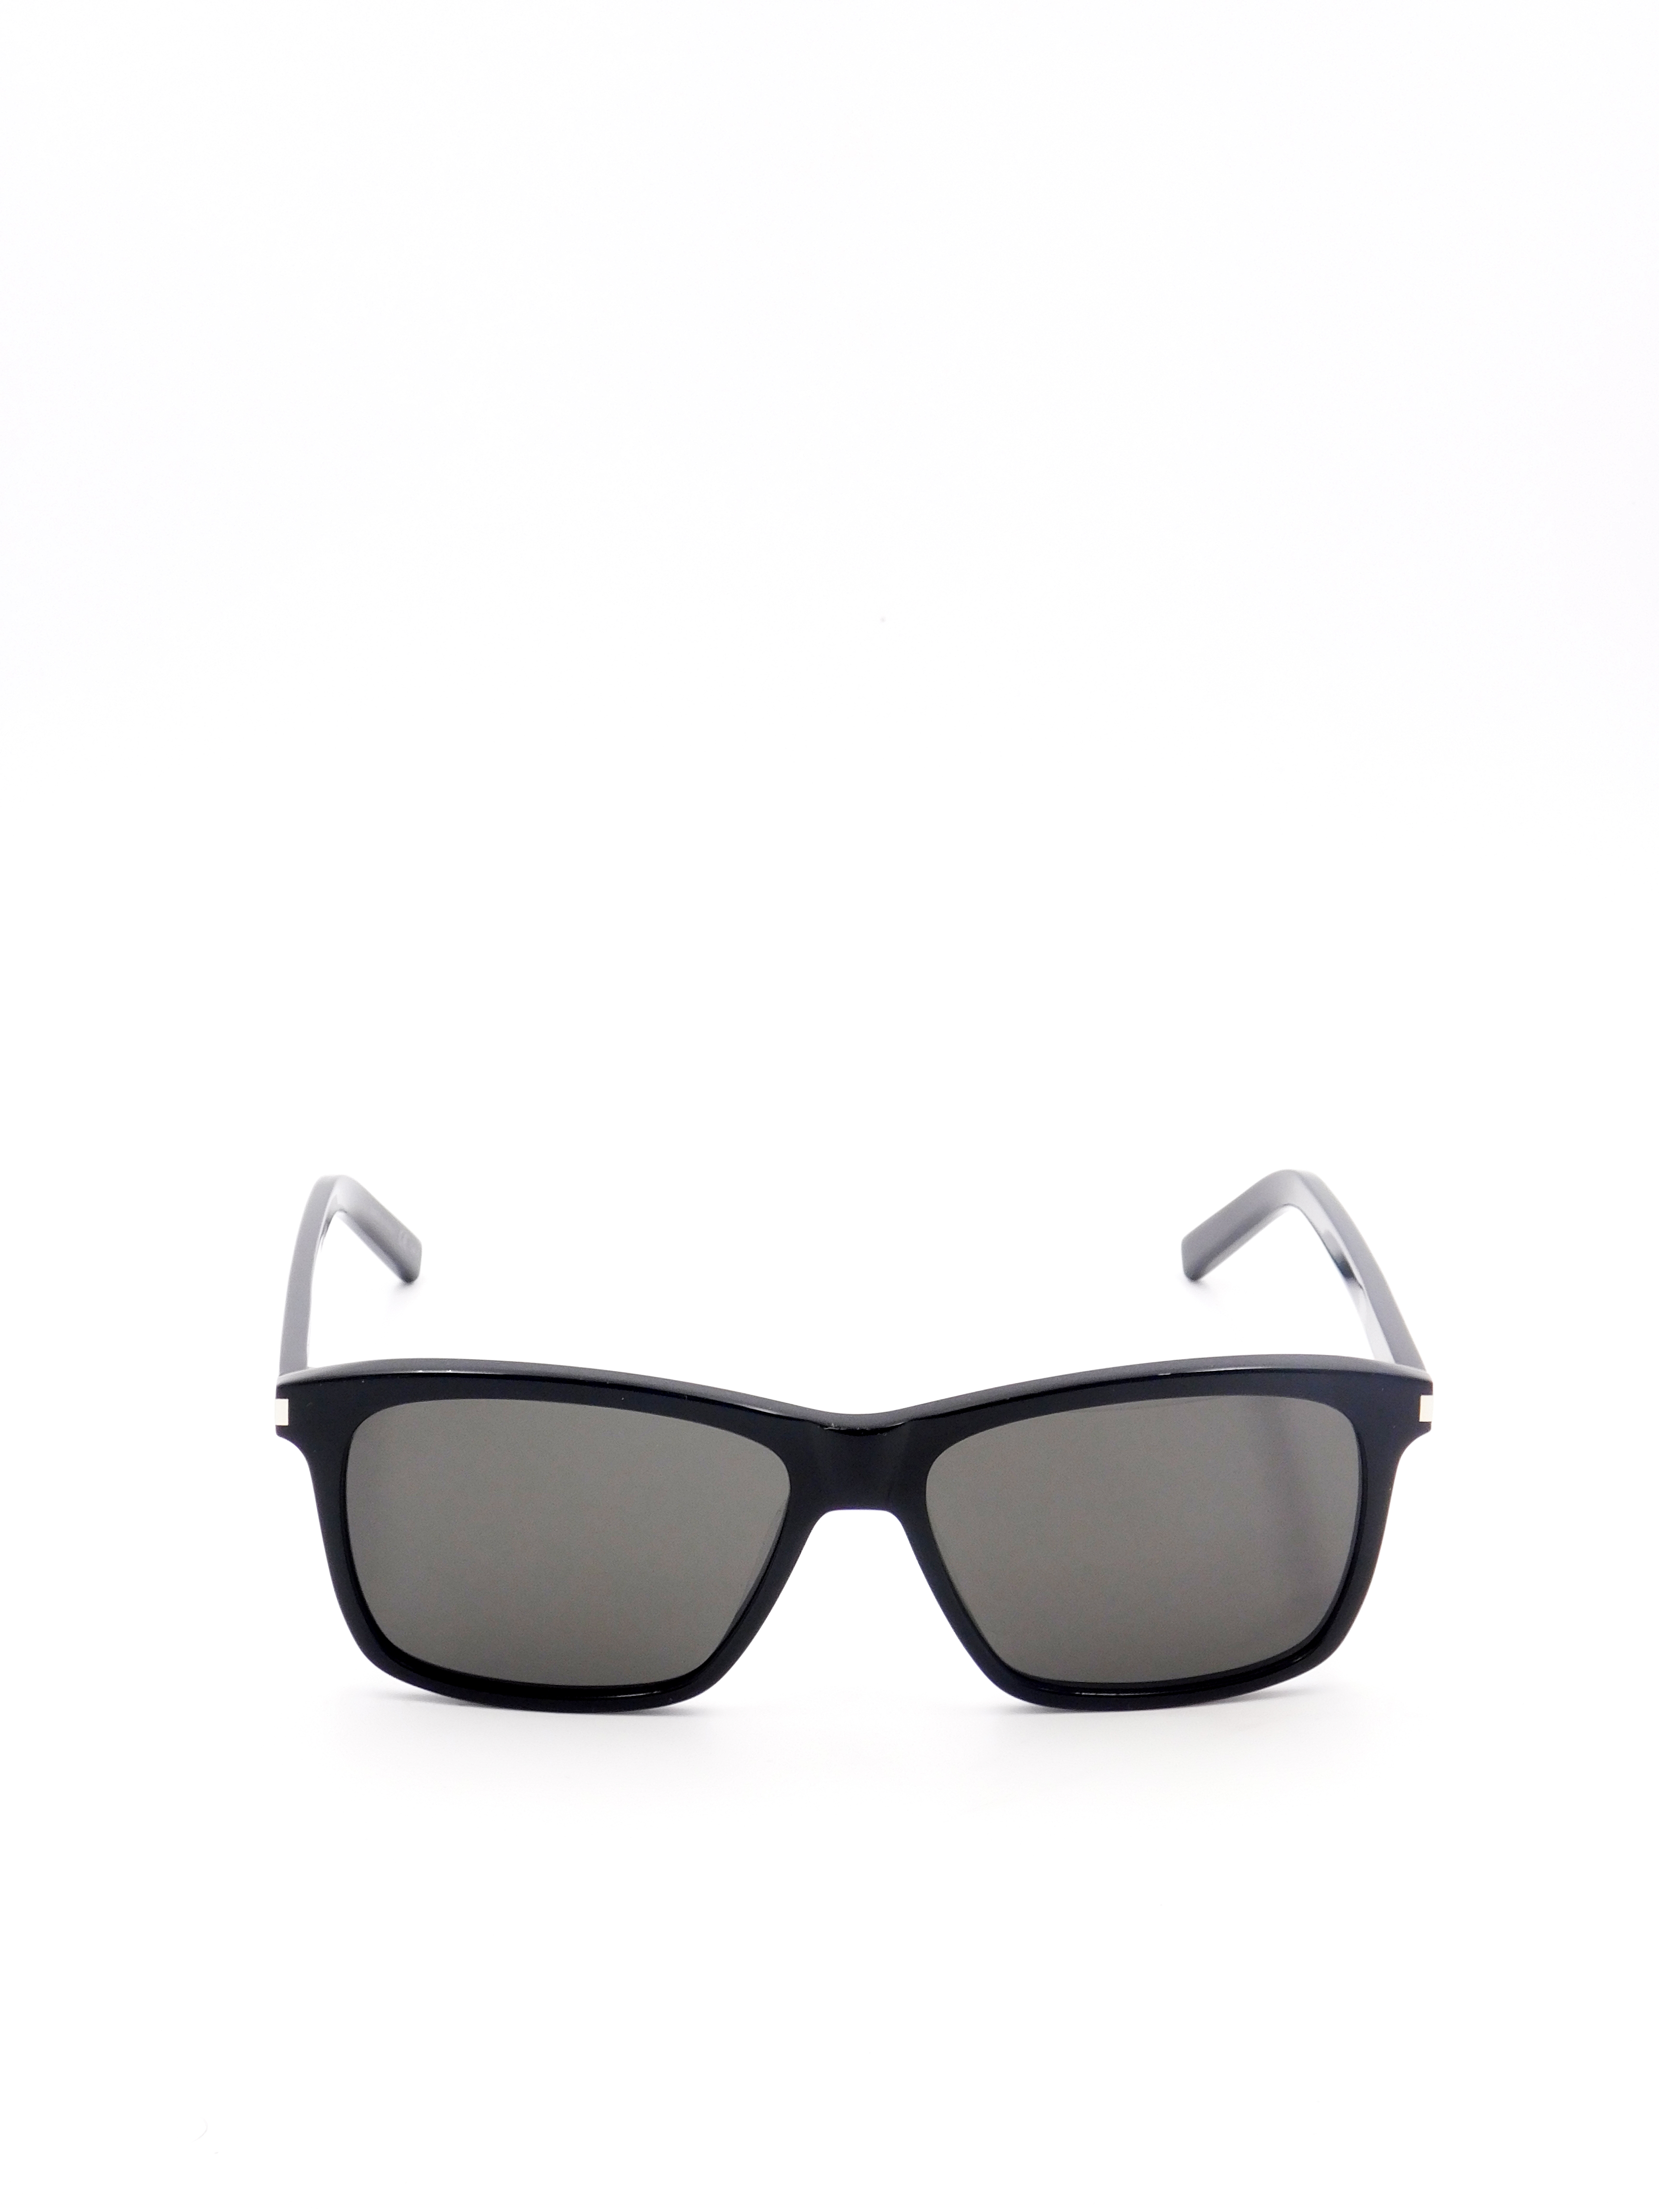 SAINT LAURENT PARIS Women's Sunglasses Black NIB Authentic | eBay